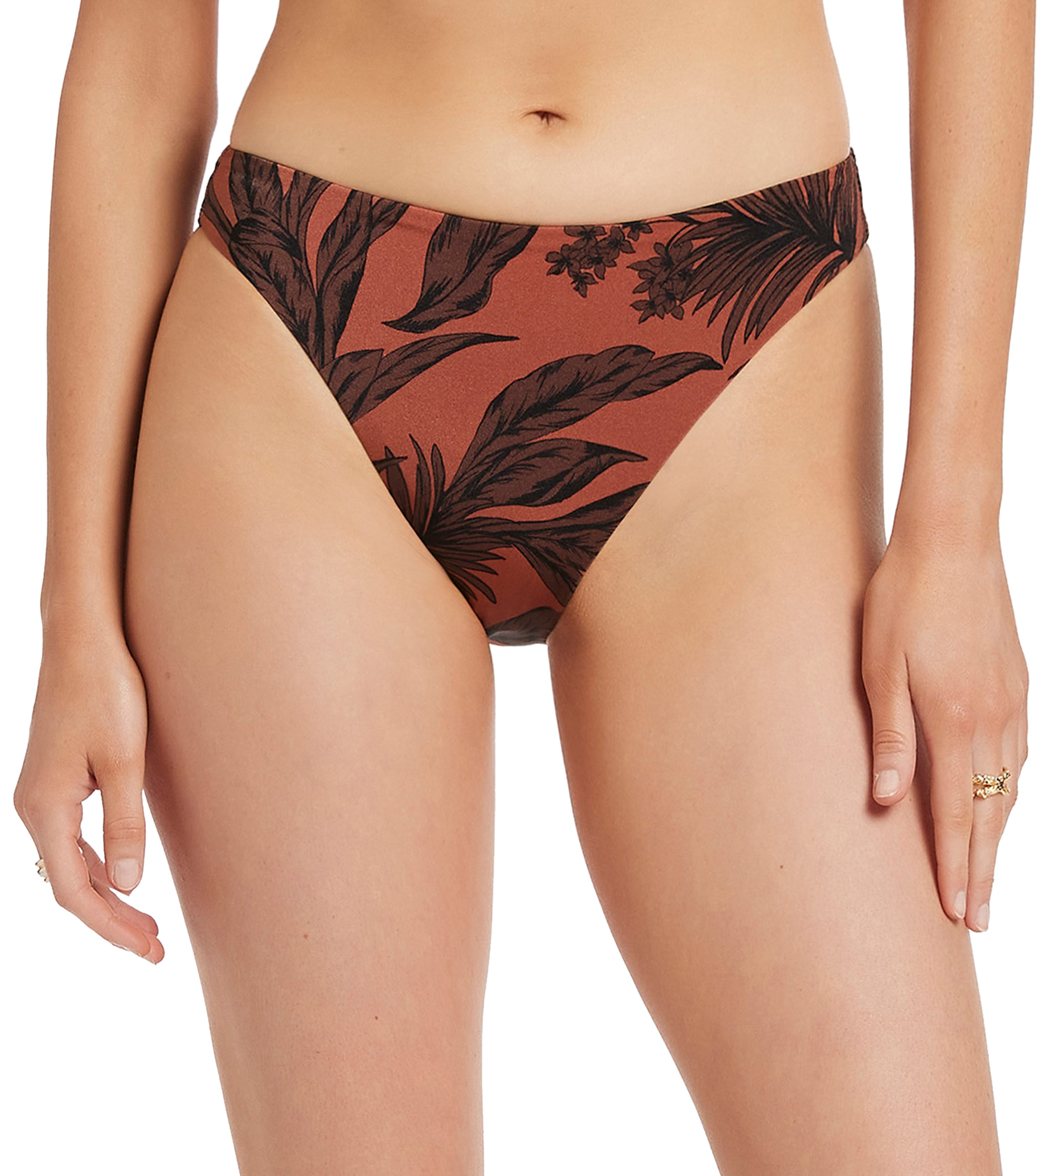 Jets Swimwear Australia Womens Desert Palm High Leg Bikini Bottom